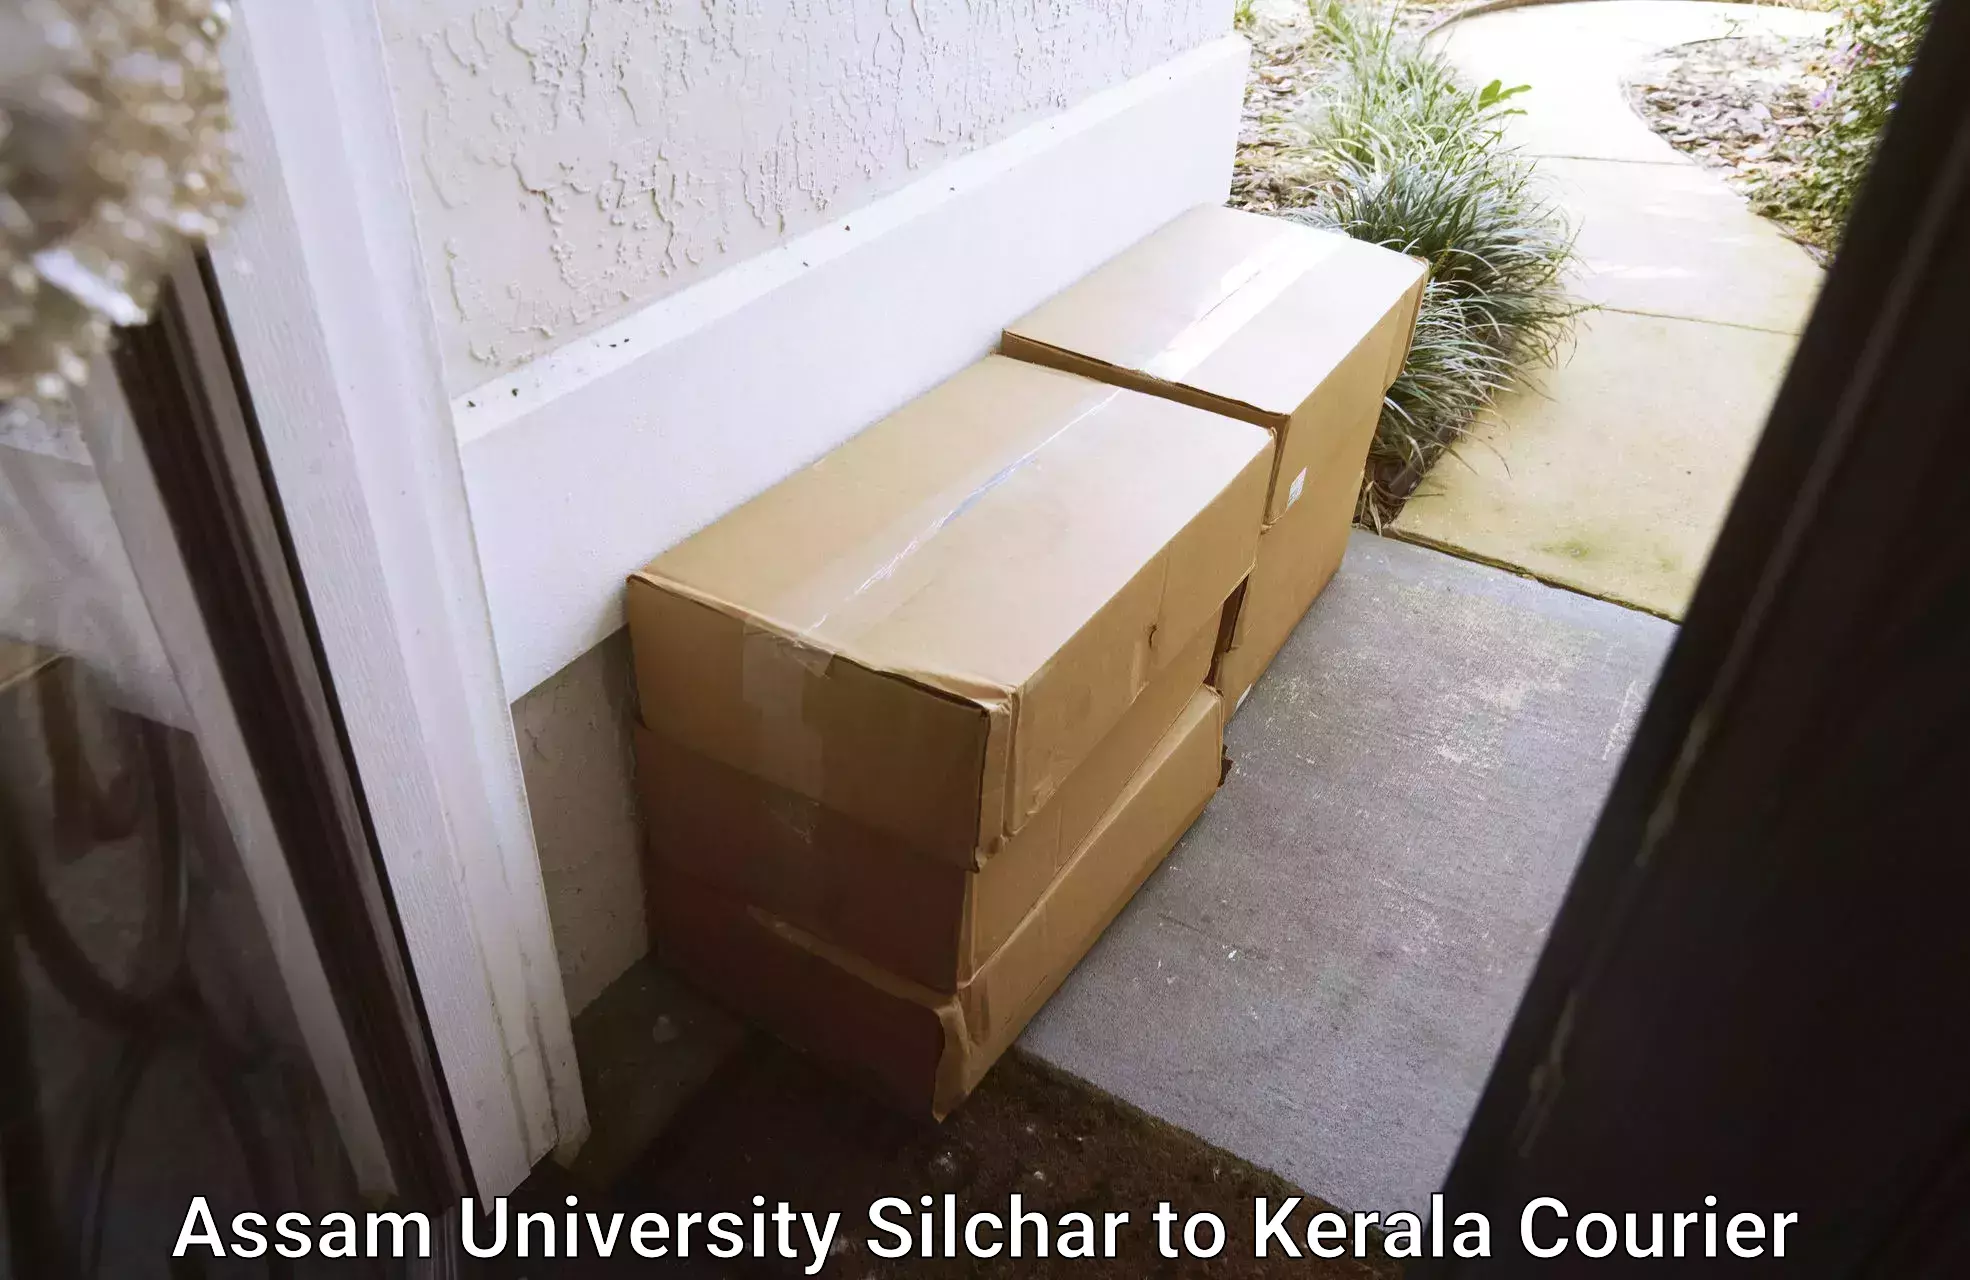 Courier service comparison in Assam University Silchar to Kerala